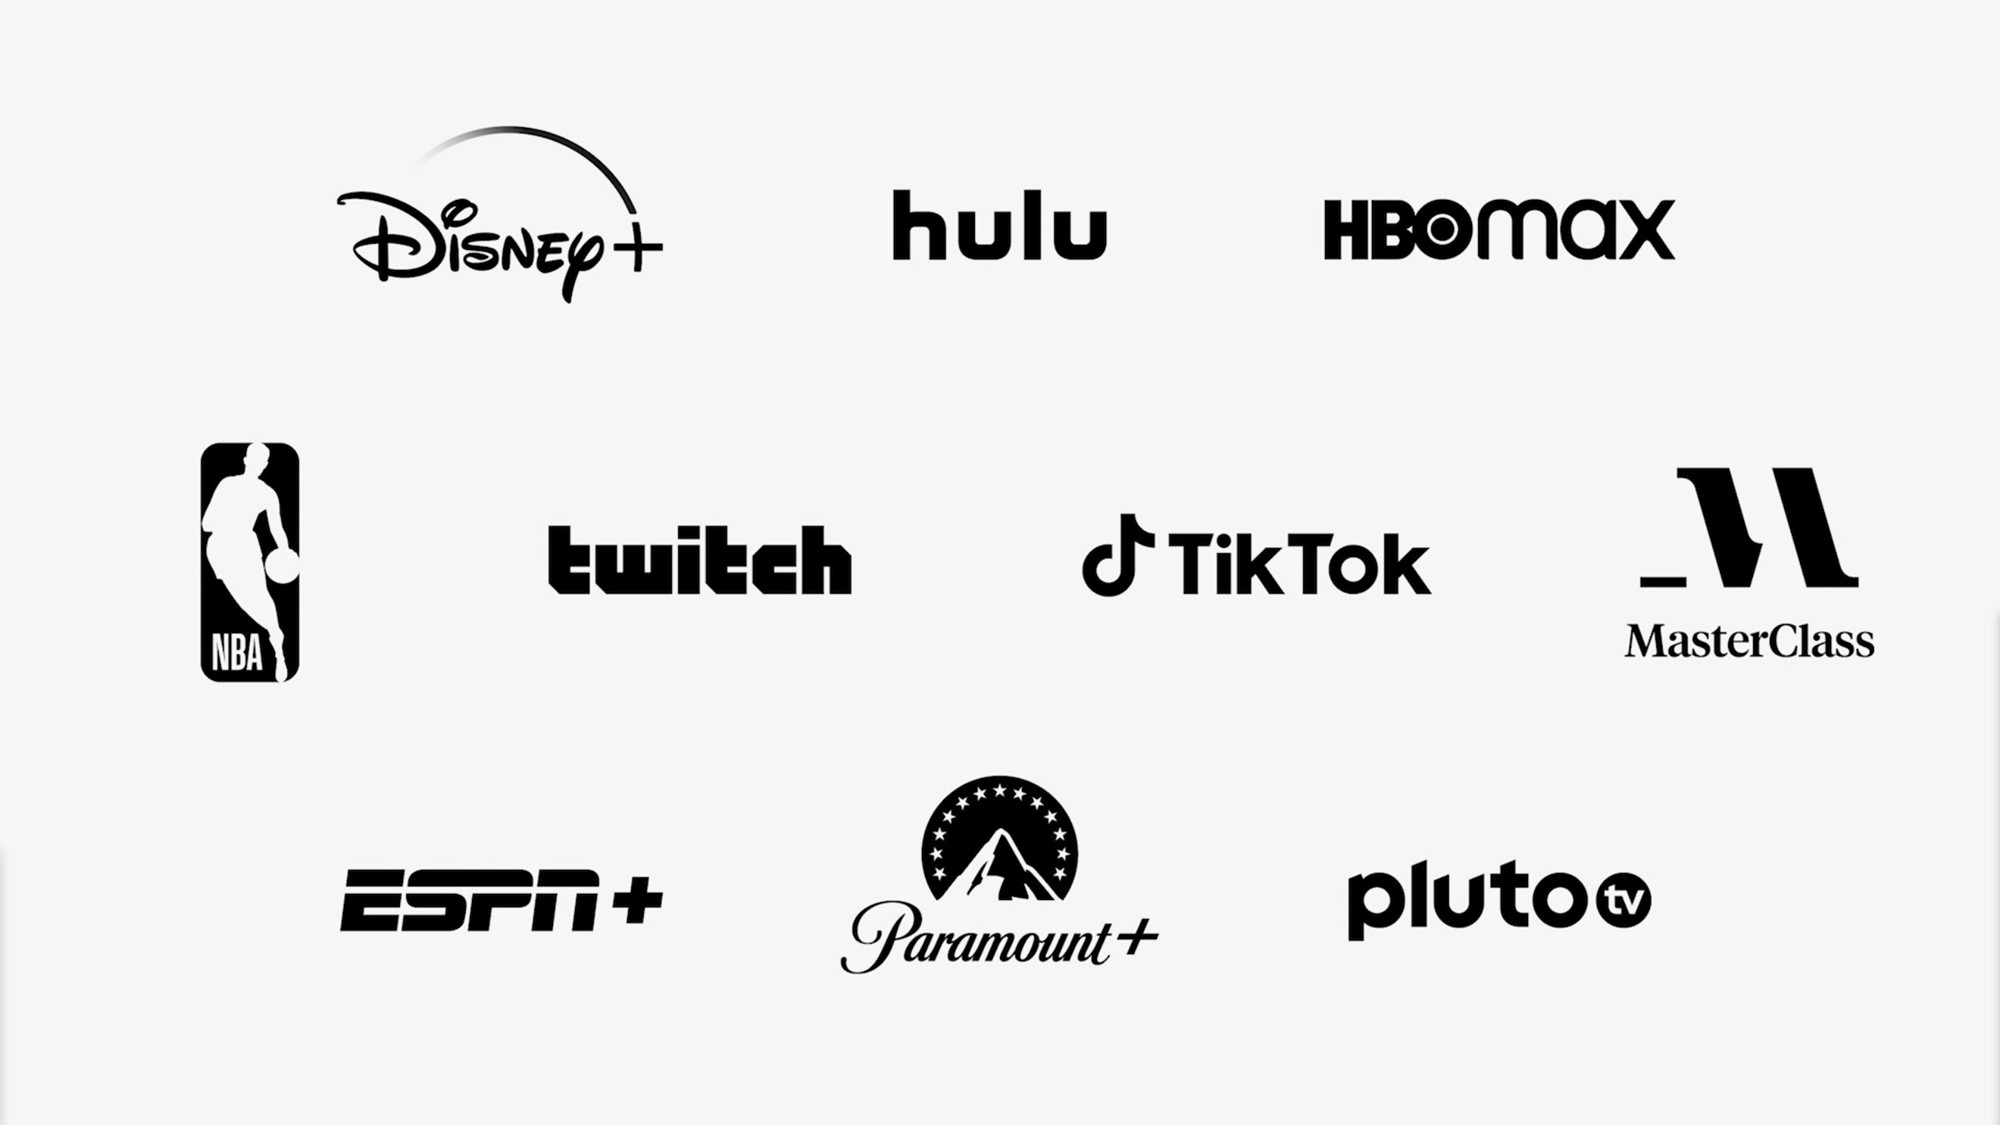 Disney+, Hulu, HBO Max, NBA, Twitch, TikTok, MasterClass, ESPN+, Paramount+ and, PlutoTV